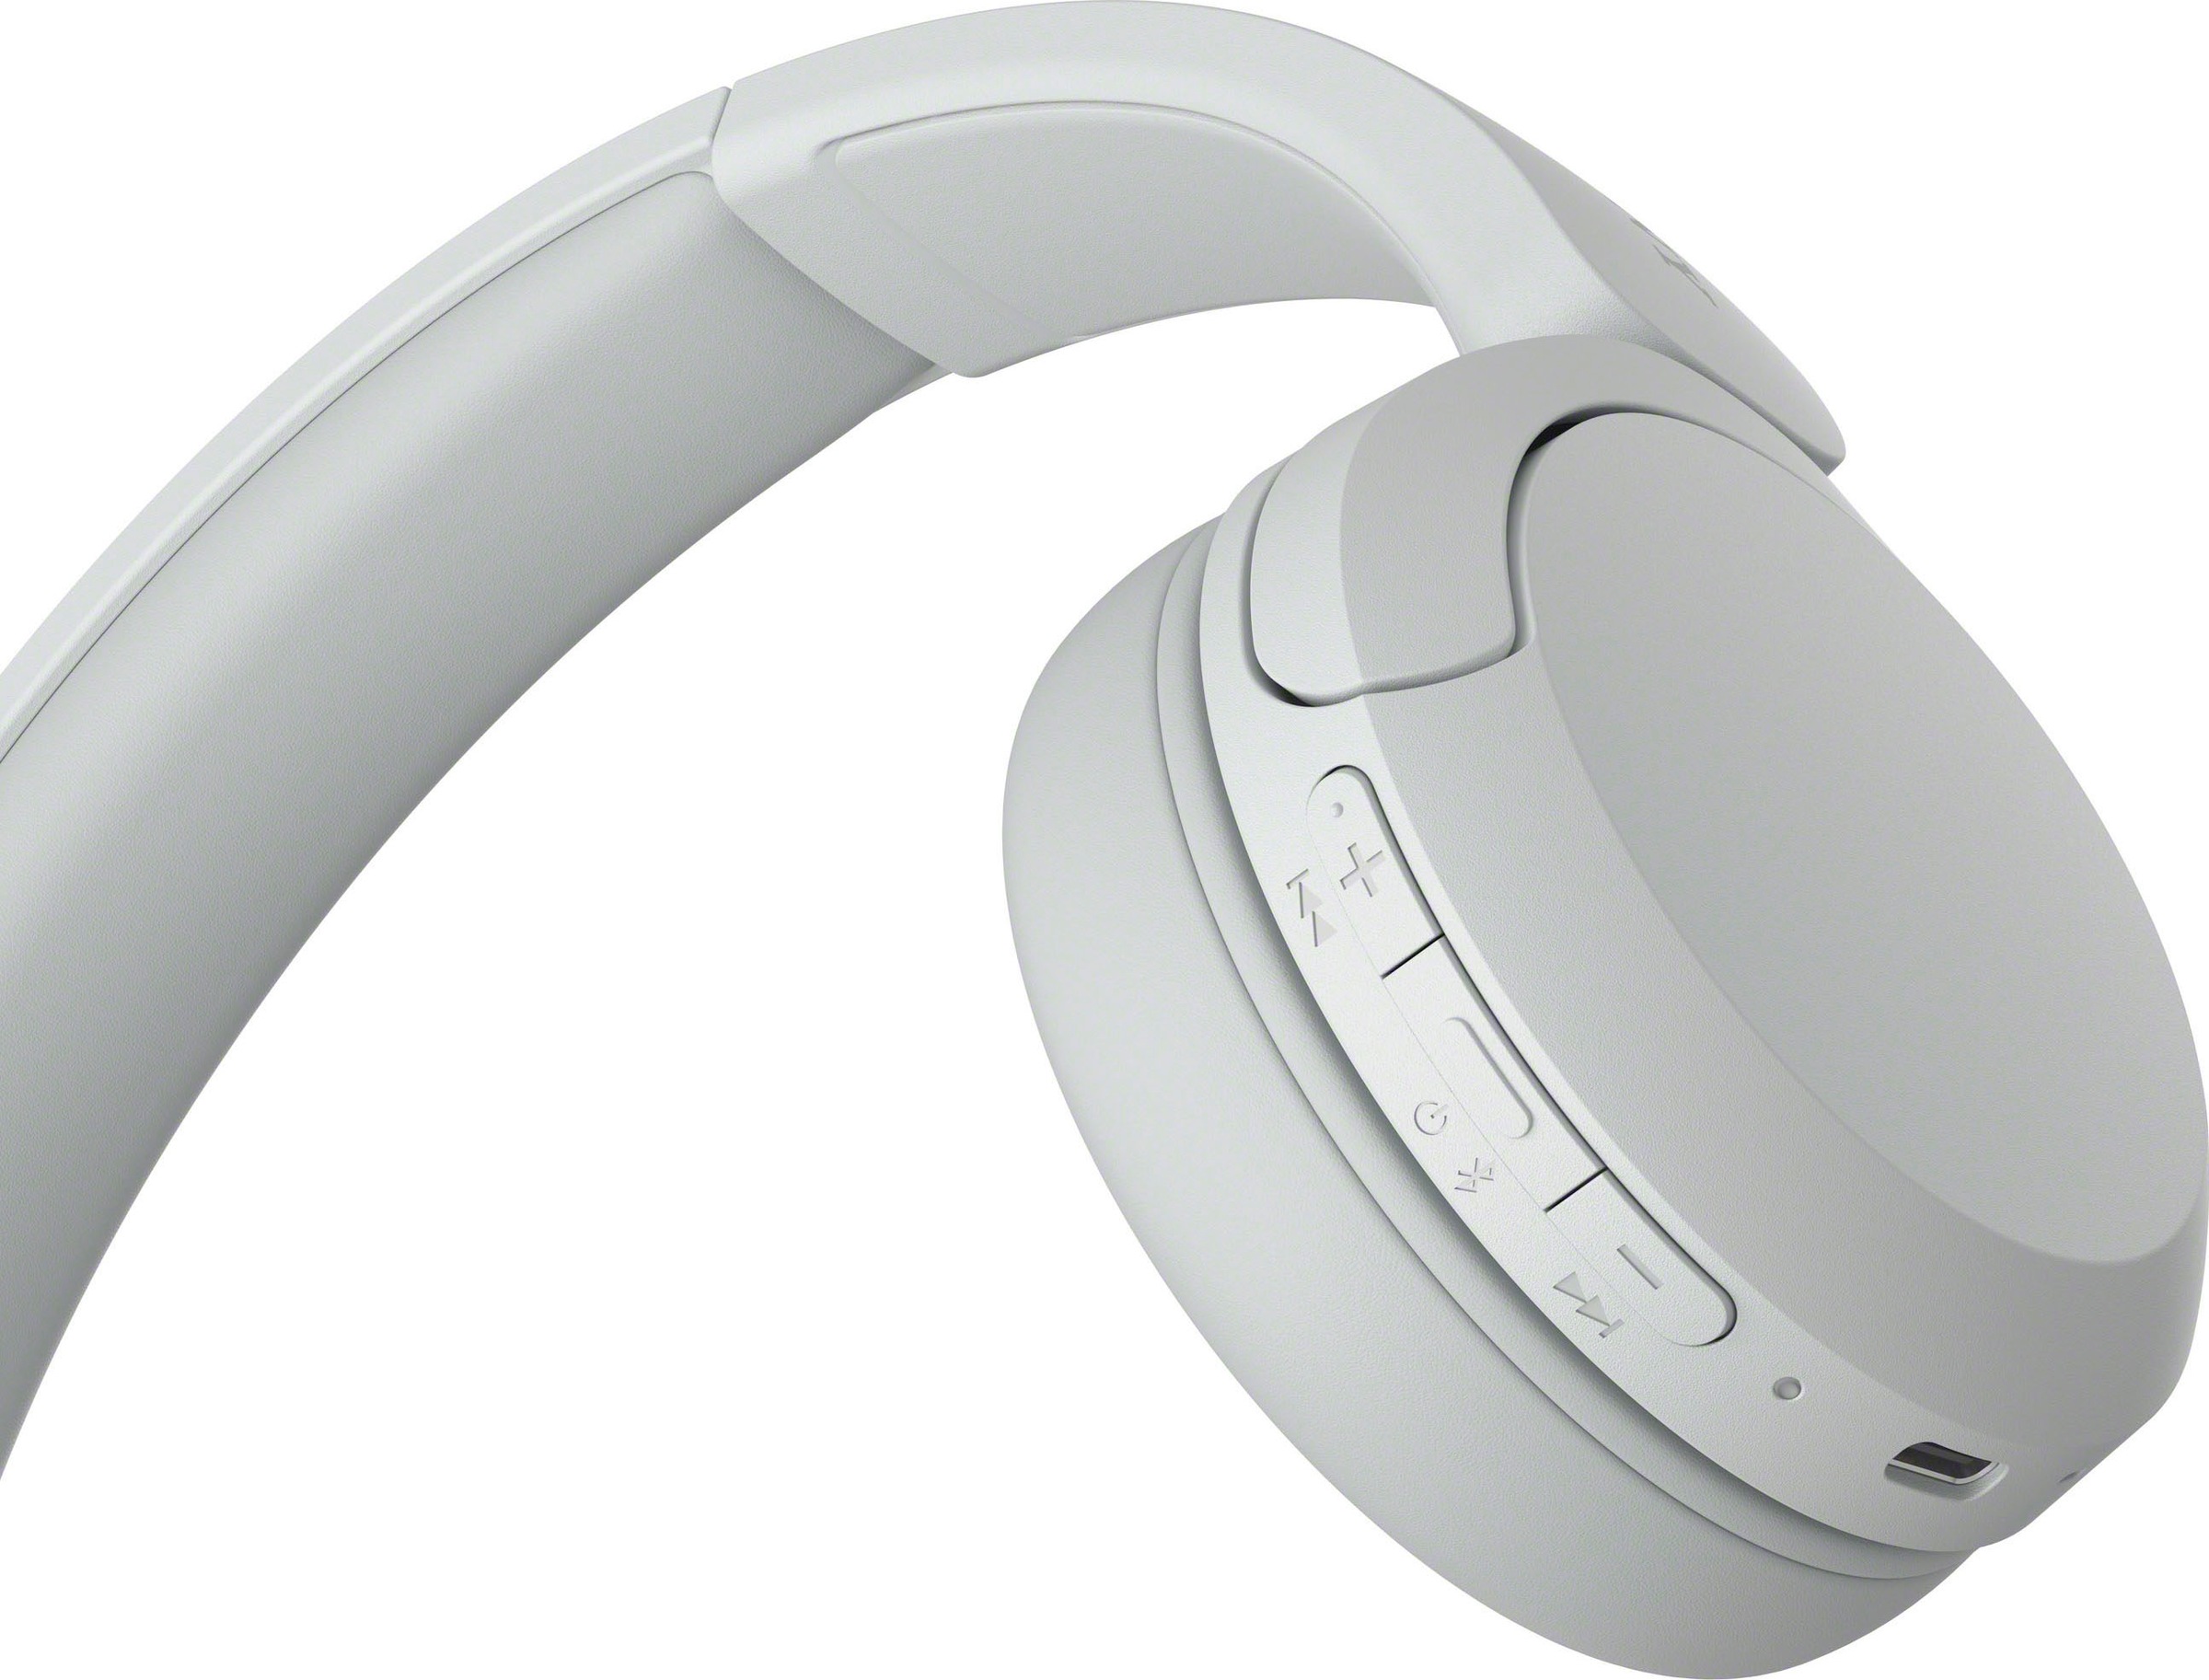 | Akkulaufzeit Rauschunterdrückung, »WHCH520«, Sony On-Ear-Kopfhörer 50 UNIVERSAL Std. kaufen Freisprechfunktion- Bluetooth,